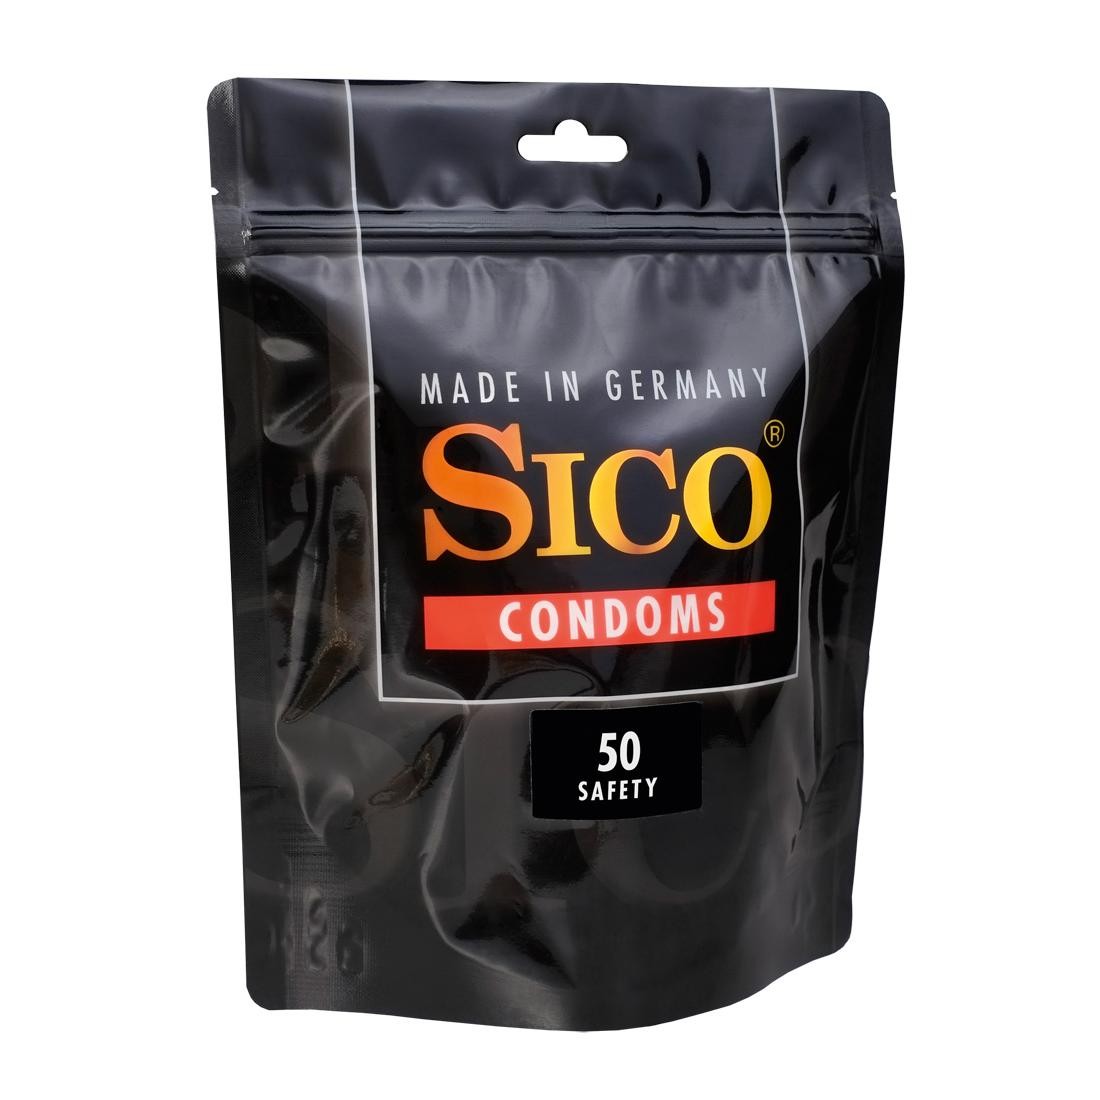  SICO  49  -  50er  Beutel  Kondome 